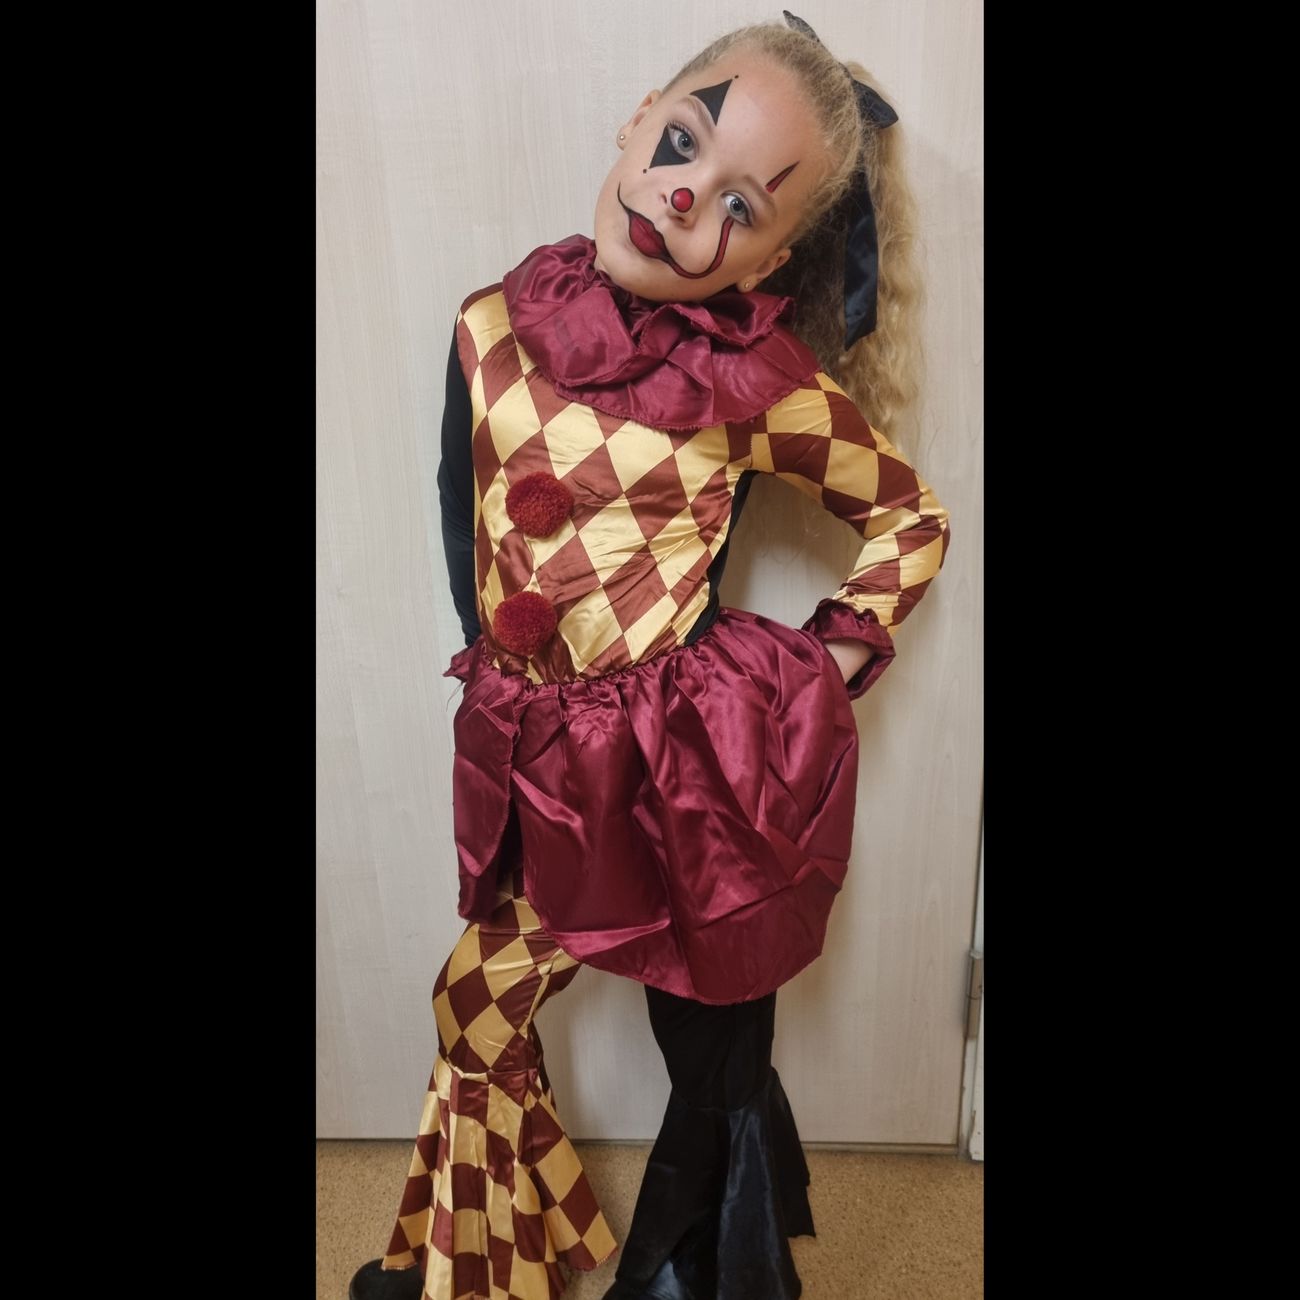 kb-laskig-clown-barn-maskeraddrakt-89866-3